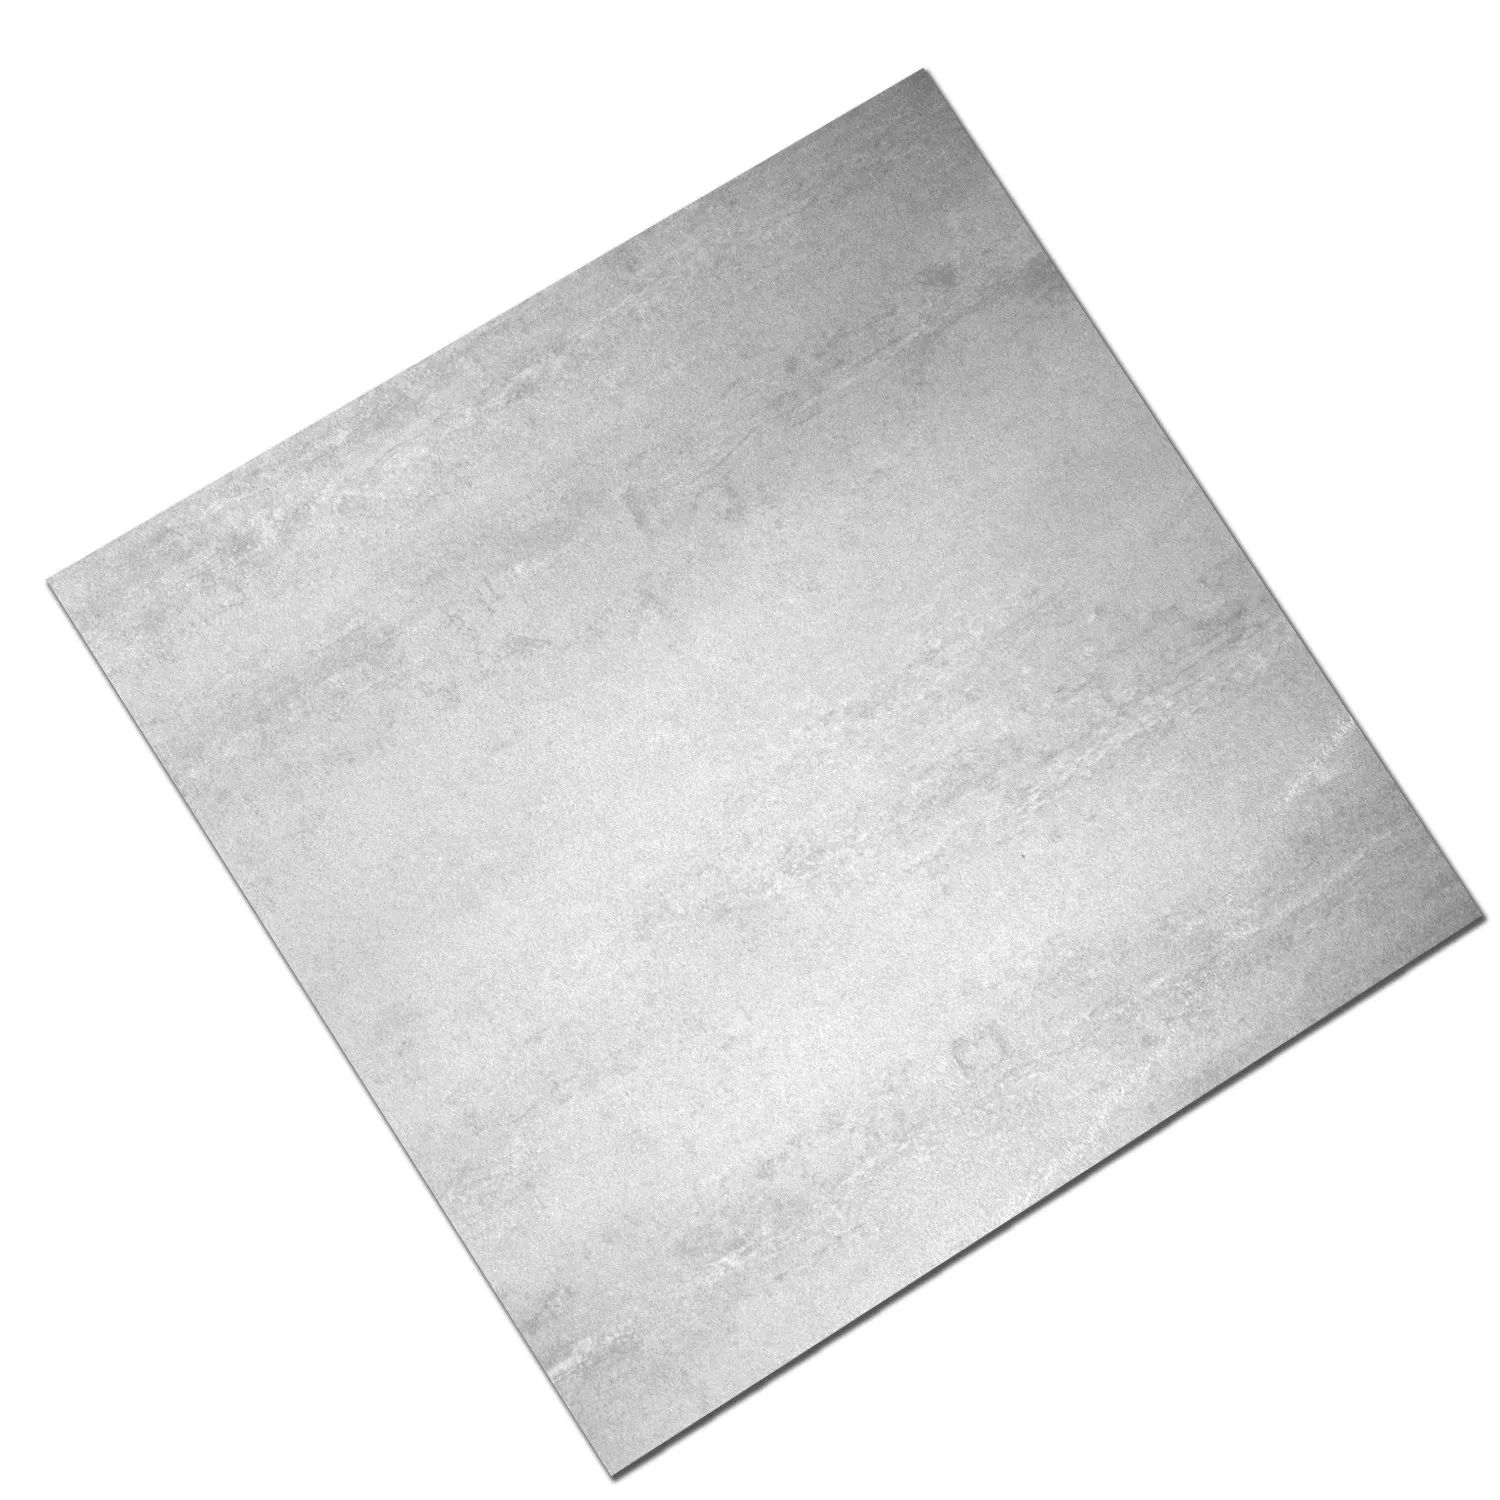 Vzorek Podlahové Dlaždice Madeira Bílá Naleštěná 60x60cm